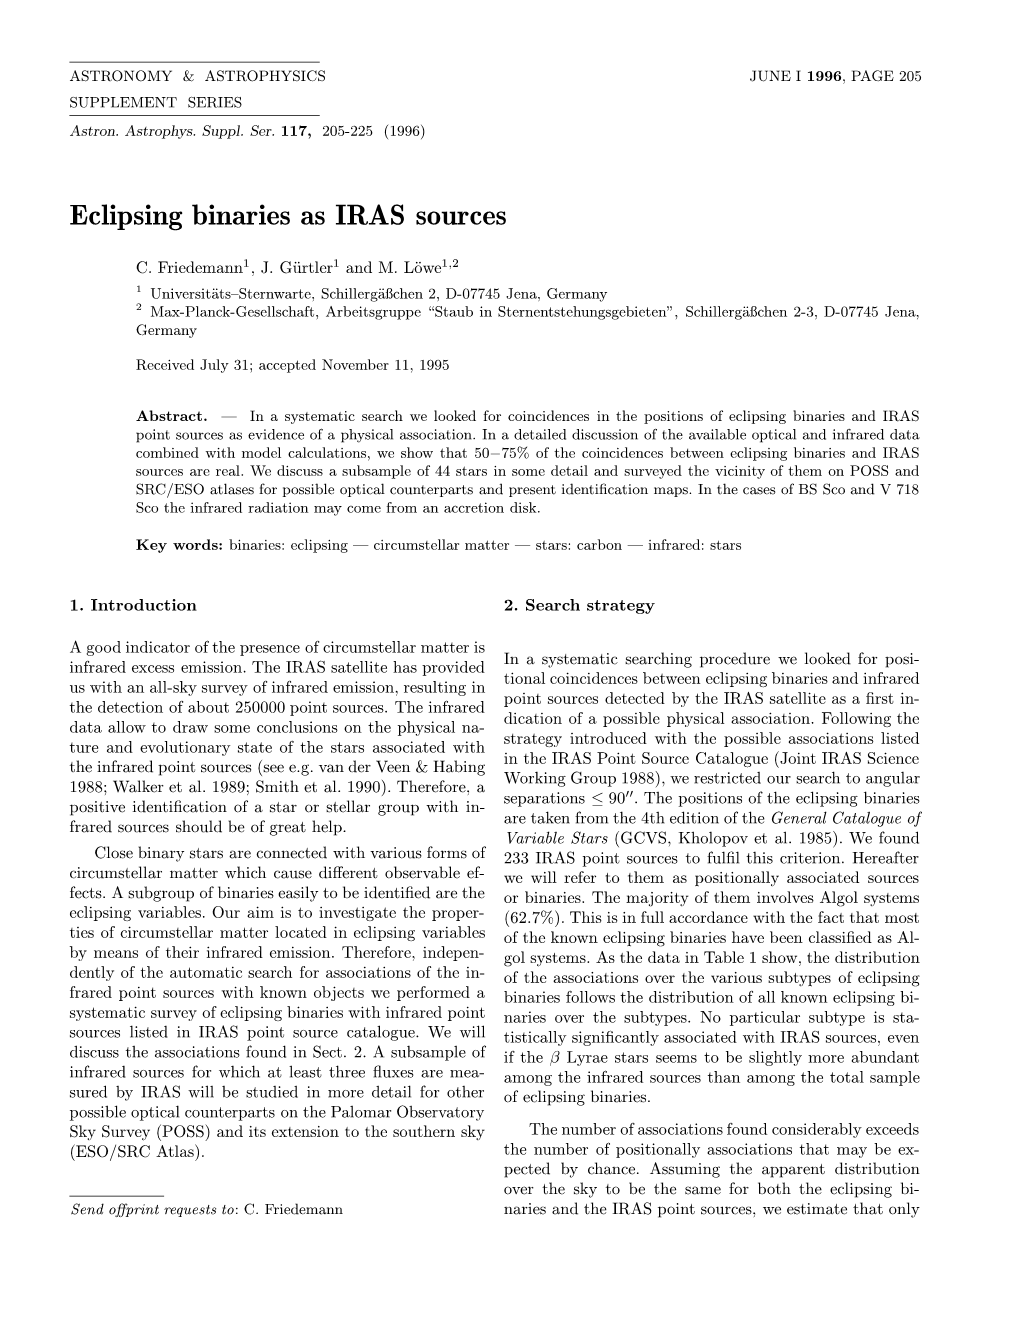 Eclipsing Binaries As IRAS Sources